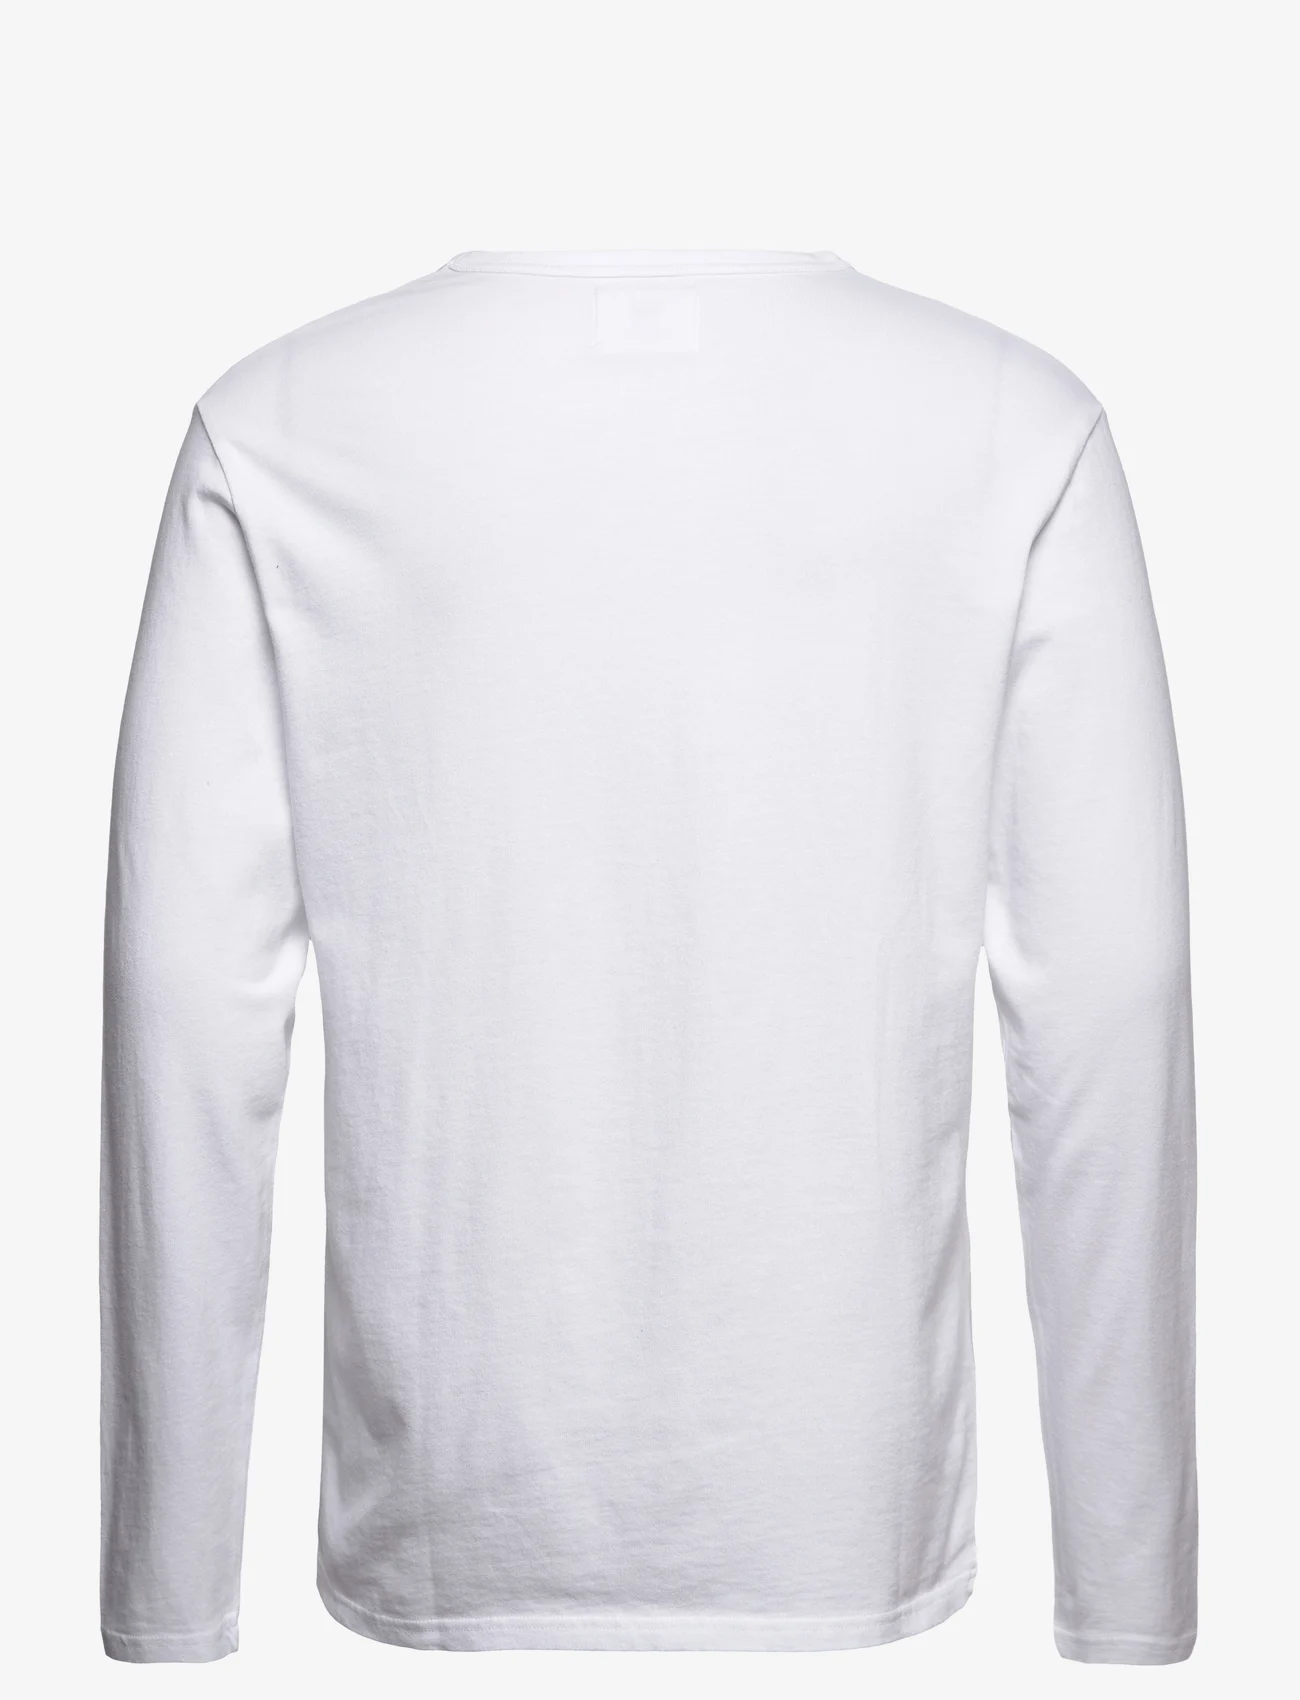 Double A by Wood Wood - Mel long sleeve - basic t-shirts - white/white - 1